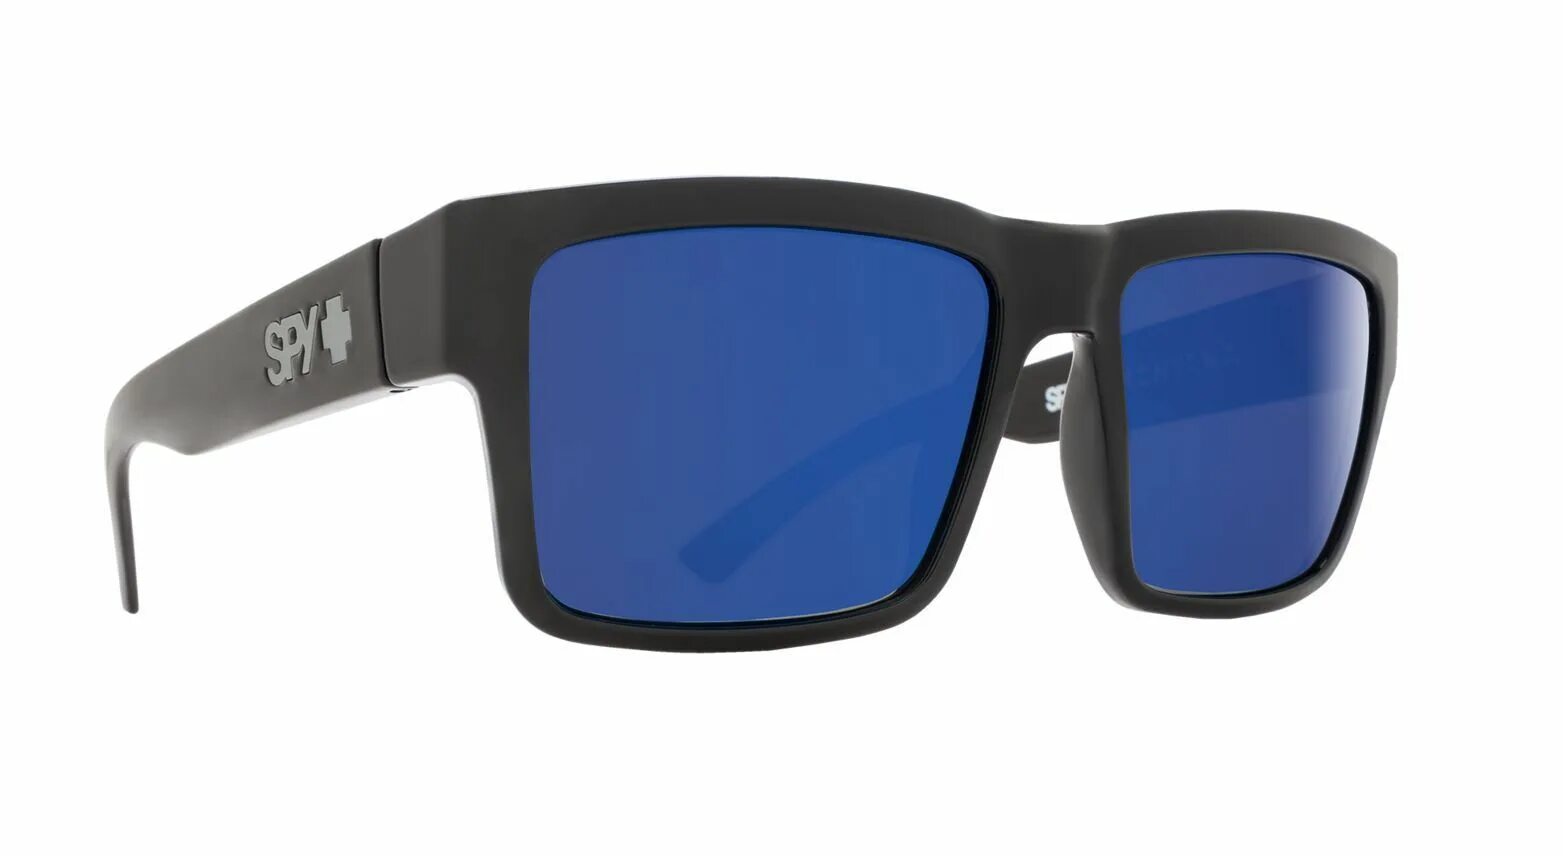 Очки солнцезащитные мужские синие. Очки Спай плюс. Очки Spy Optic для мужчин. Spy+ Helm Matte Black. Spy+ очки Balboa.